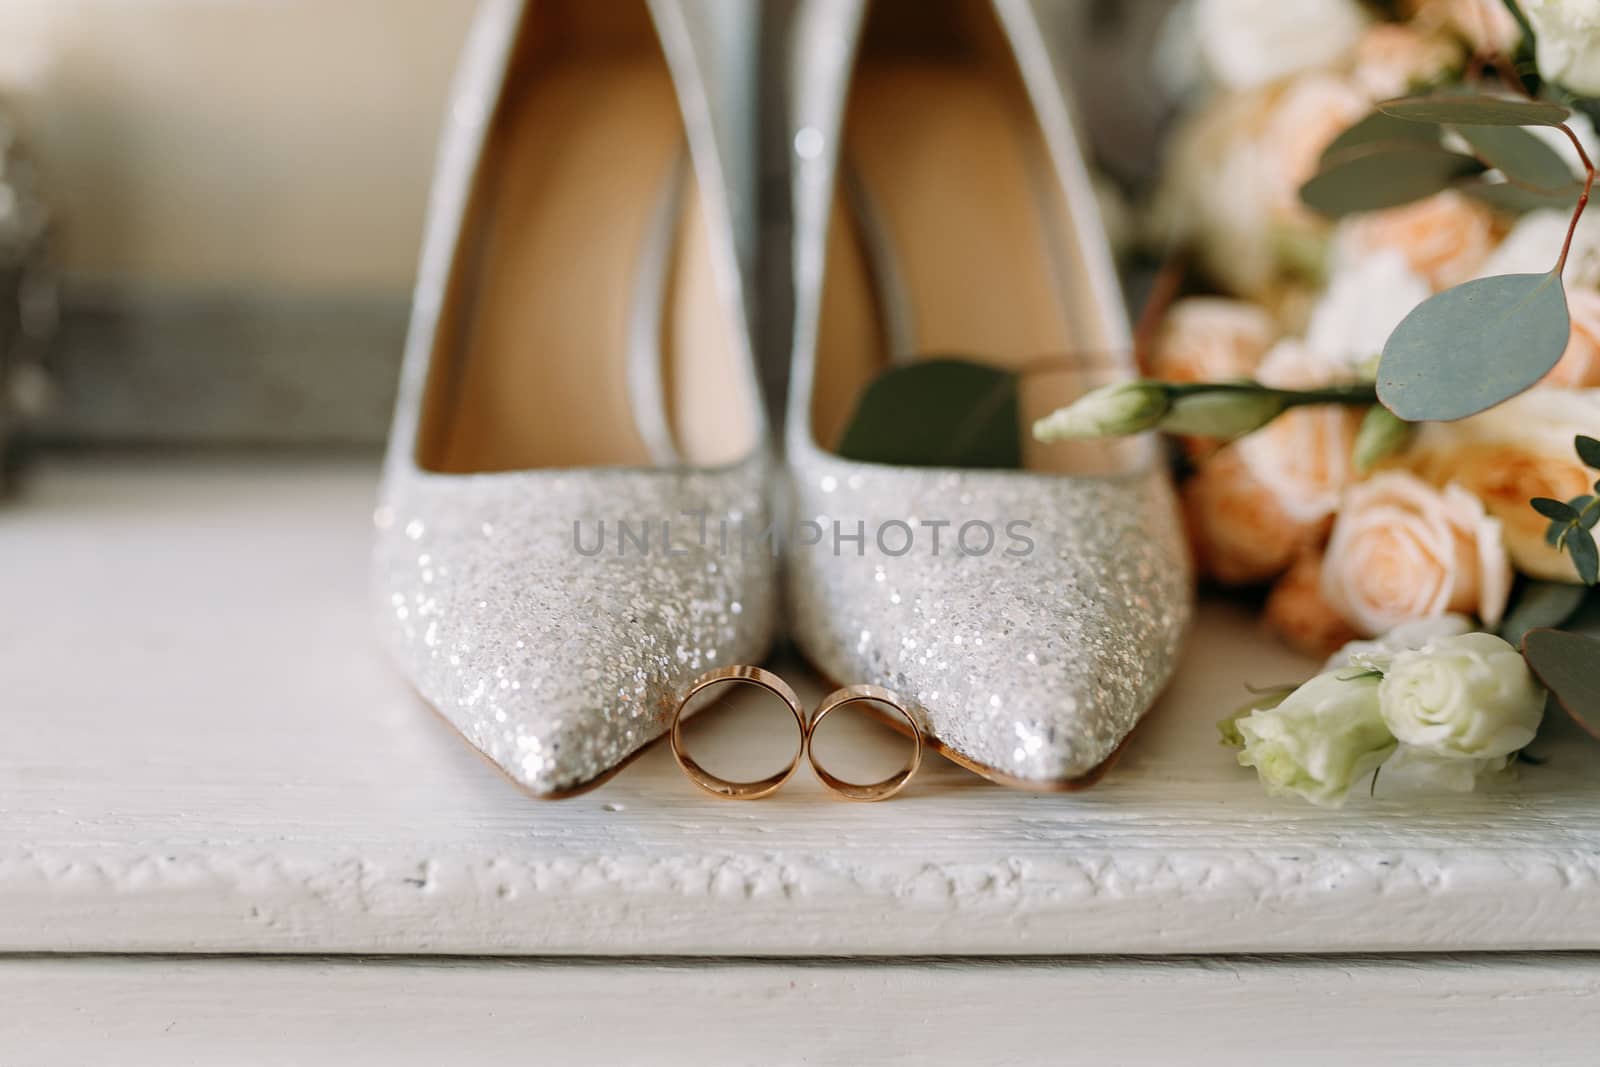 Wedding shoes and wedding paraphernalia, wedding gold rings,, wedding bouquet by Mastak80